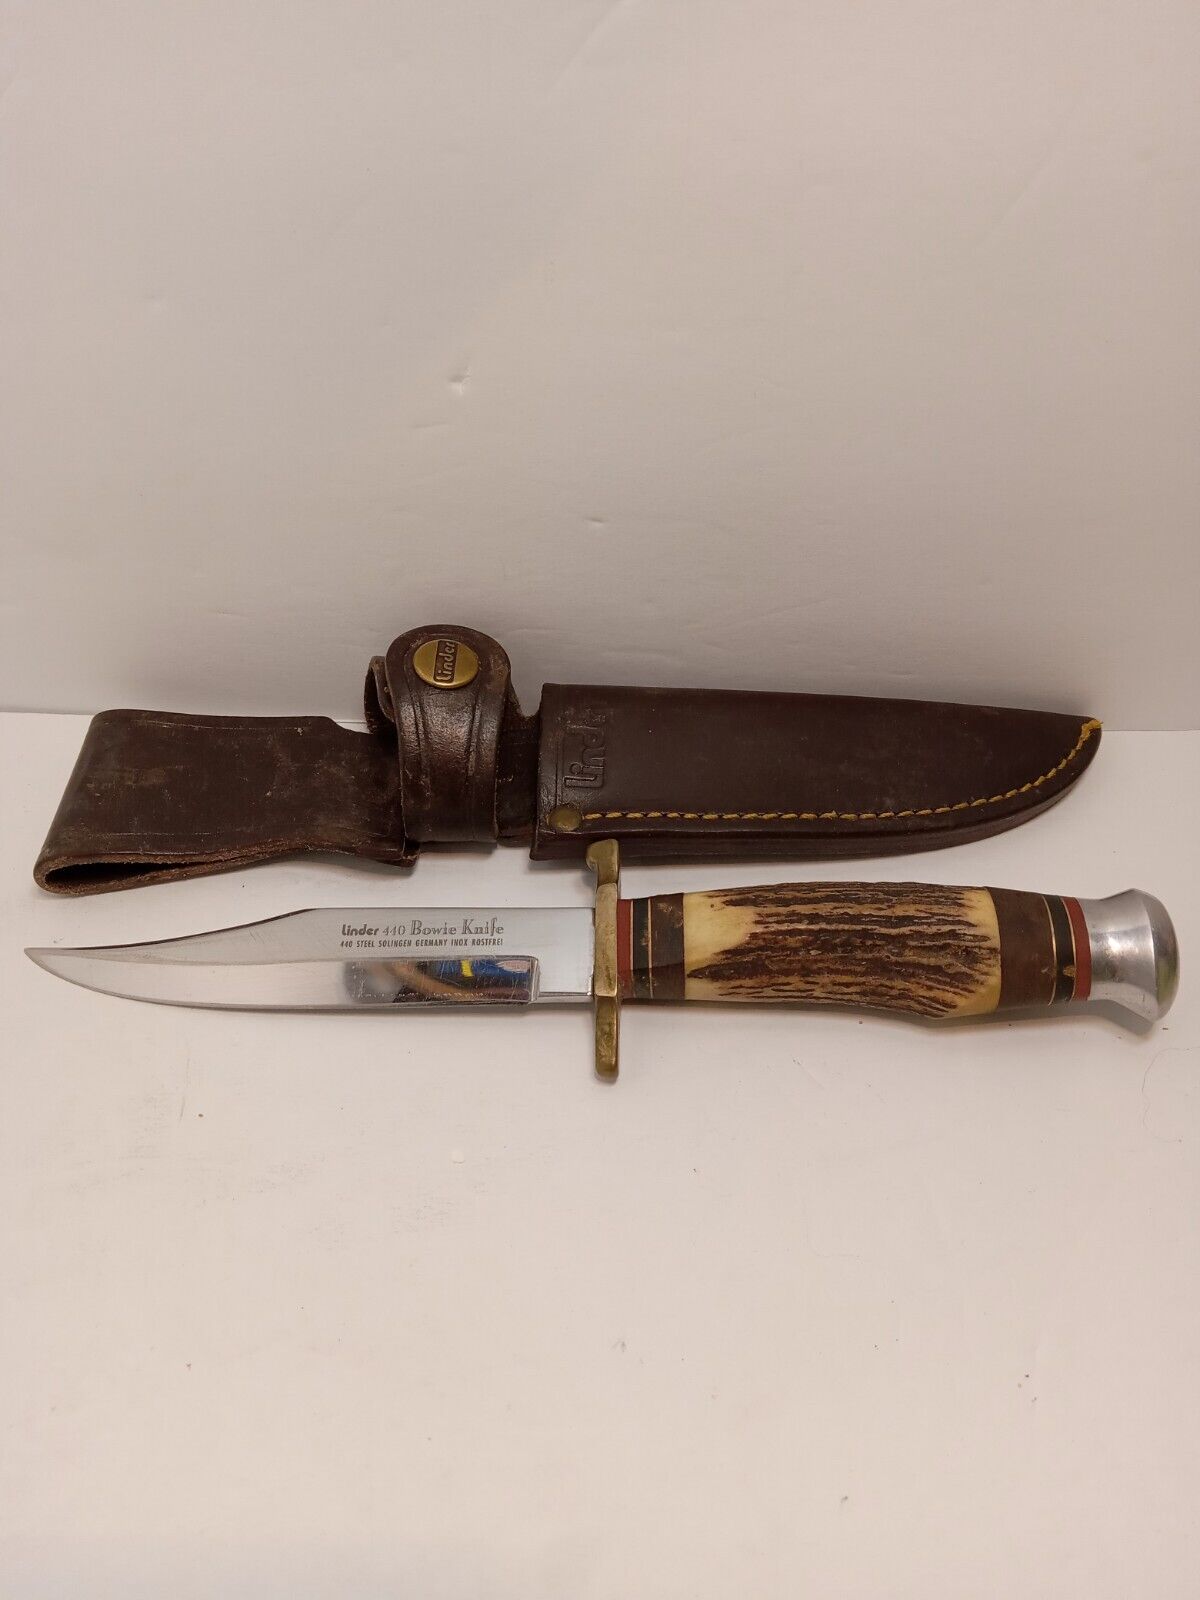 Vintage Linder 440 Bowie Knife Made In Soligen Germany Steel 5 Inch Blade Fixed